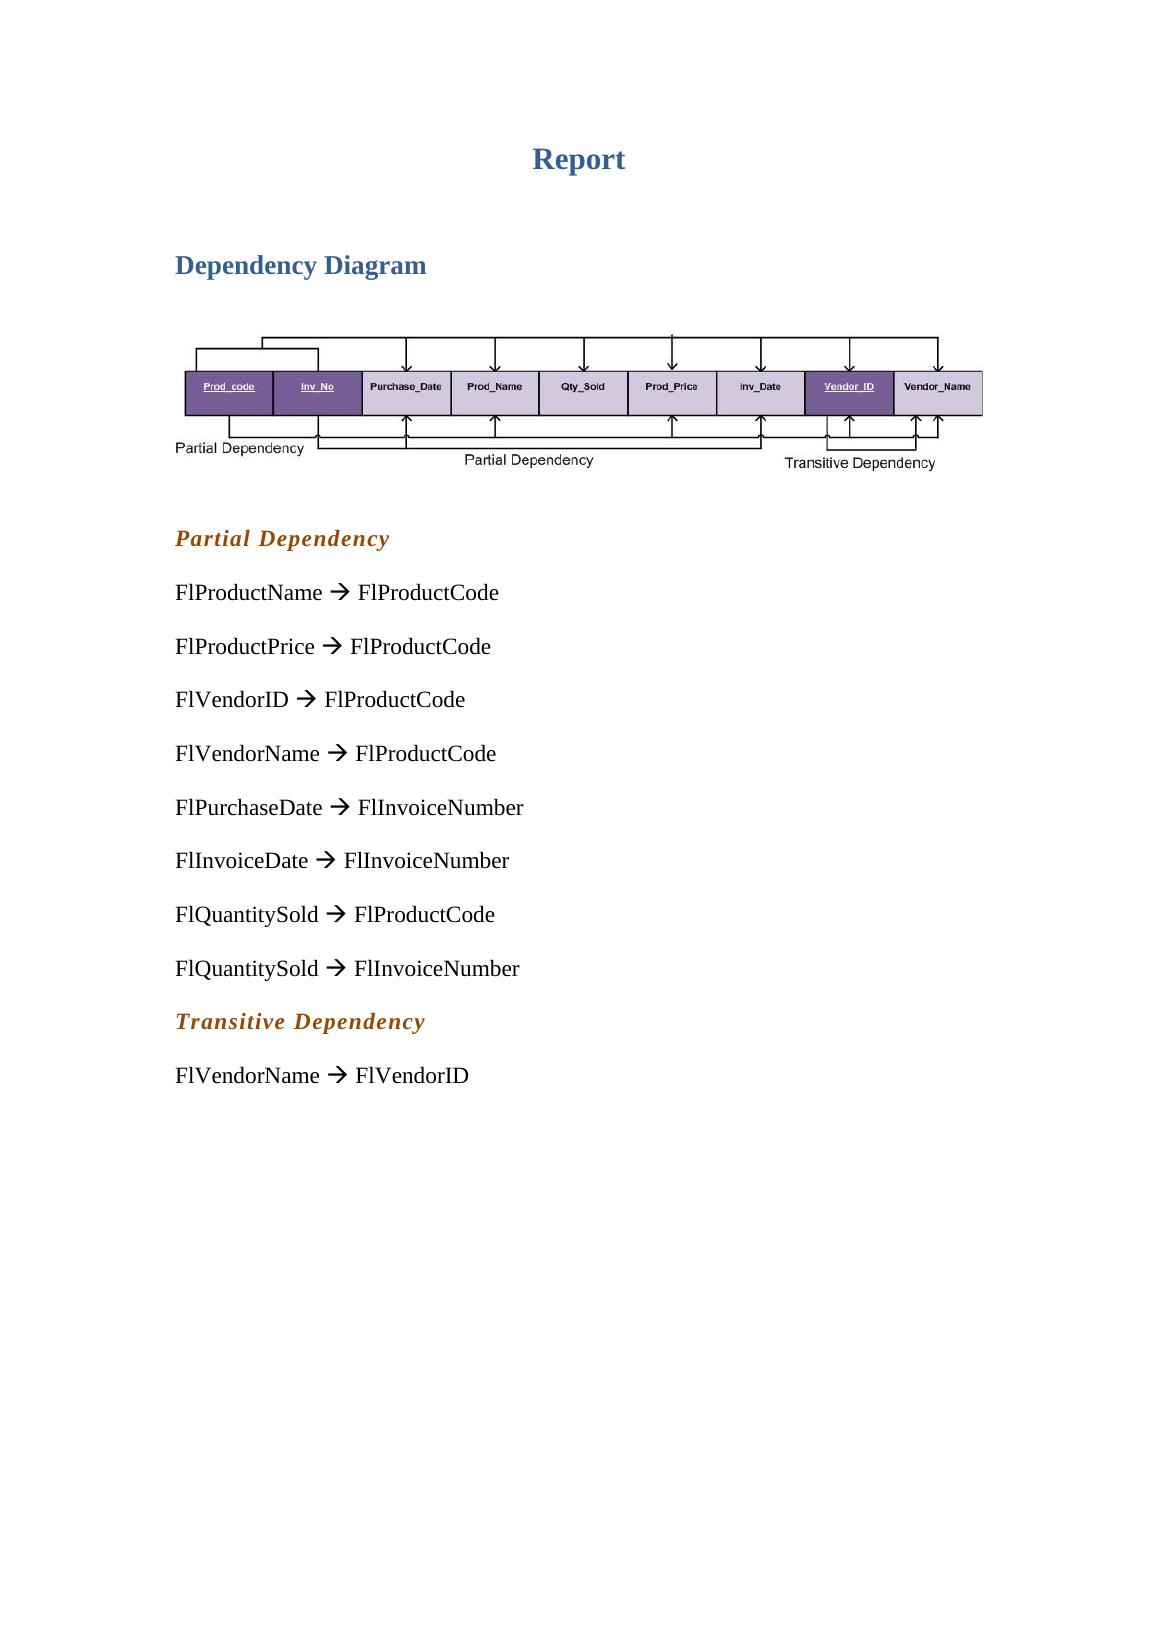 Report Dependency Diagram_2